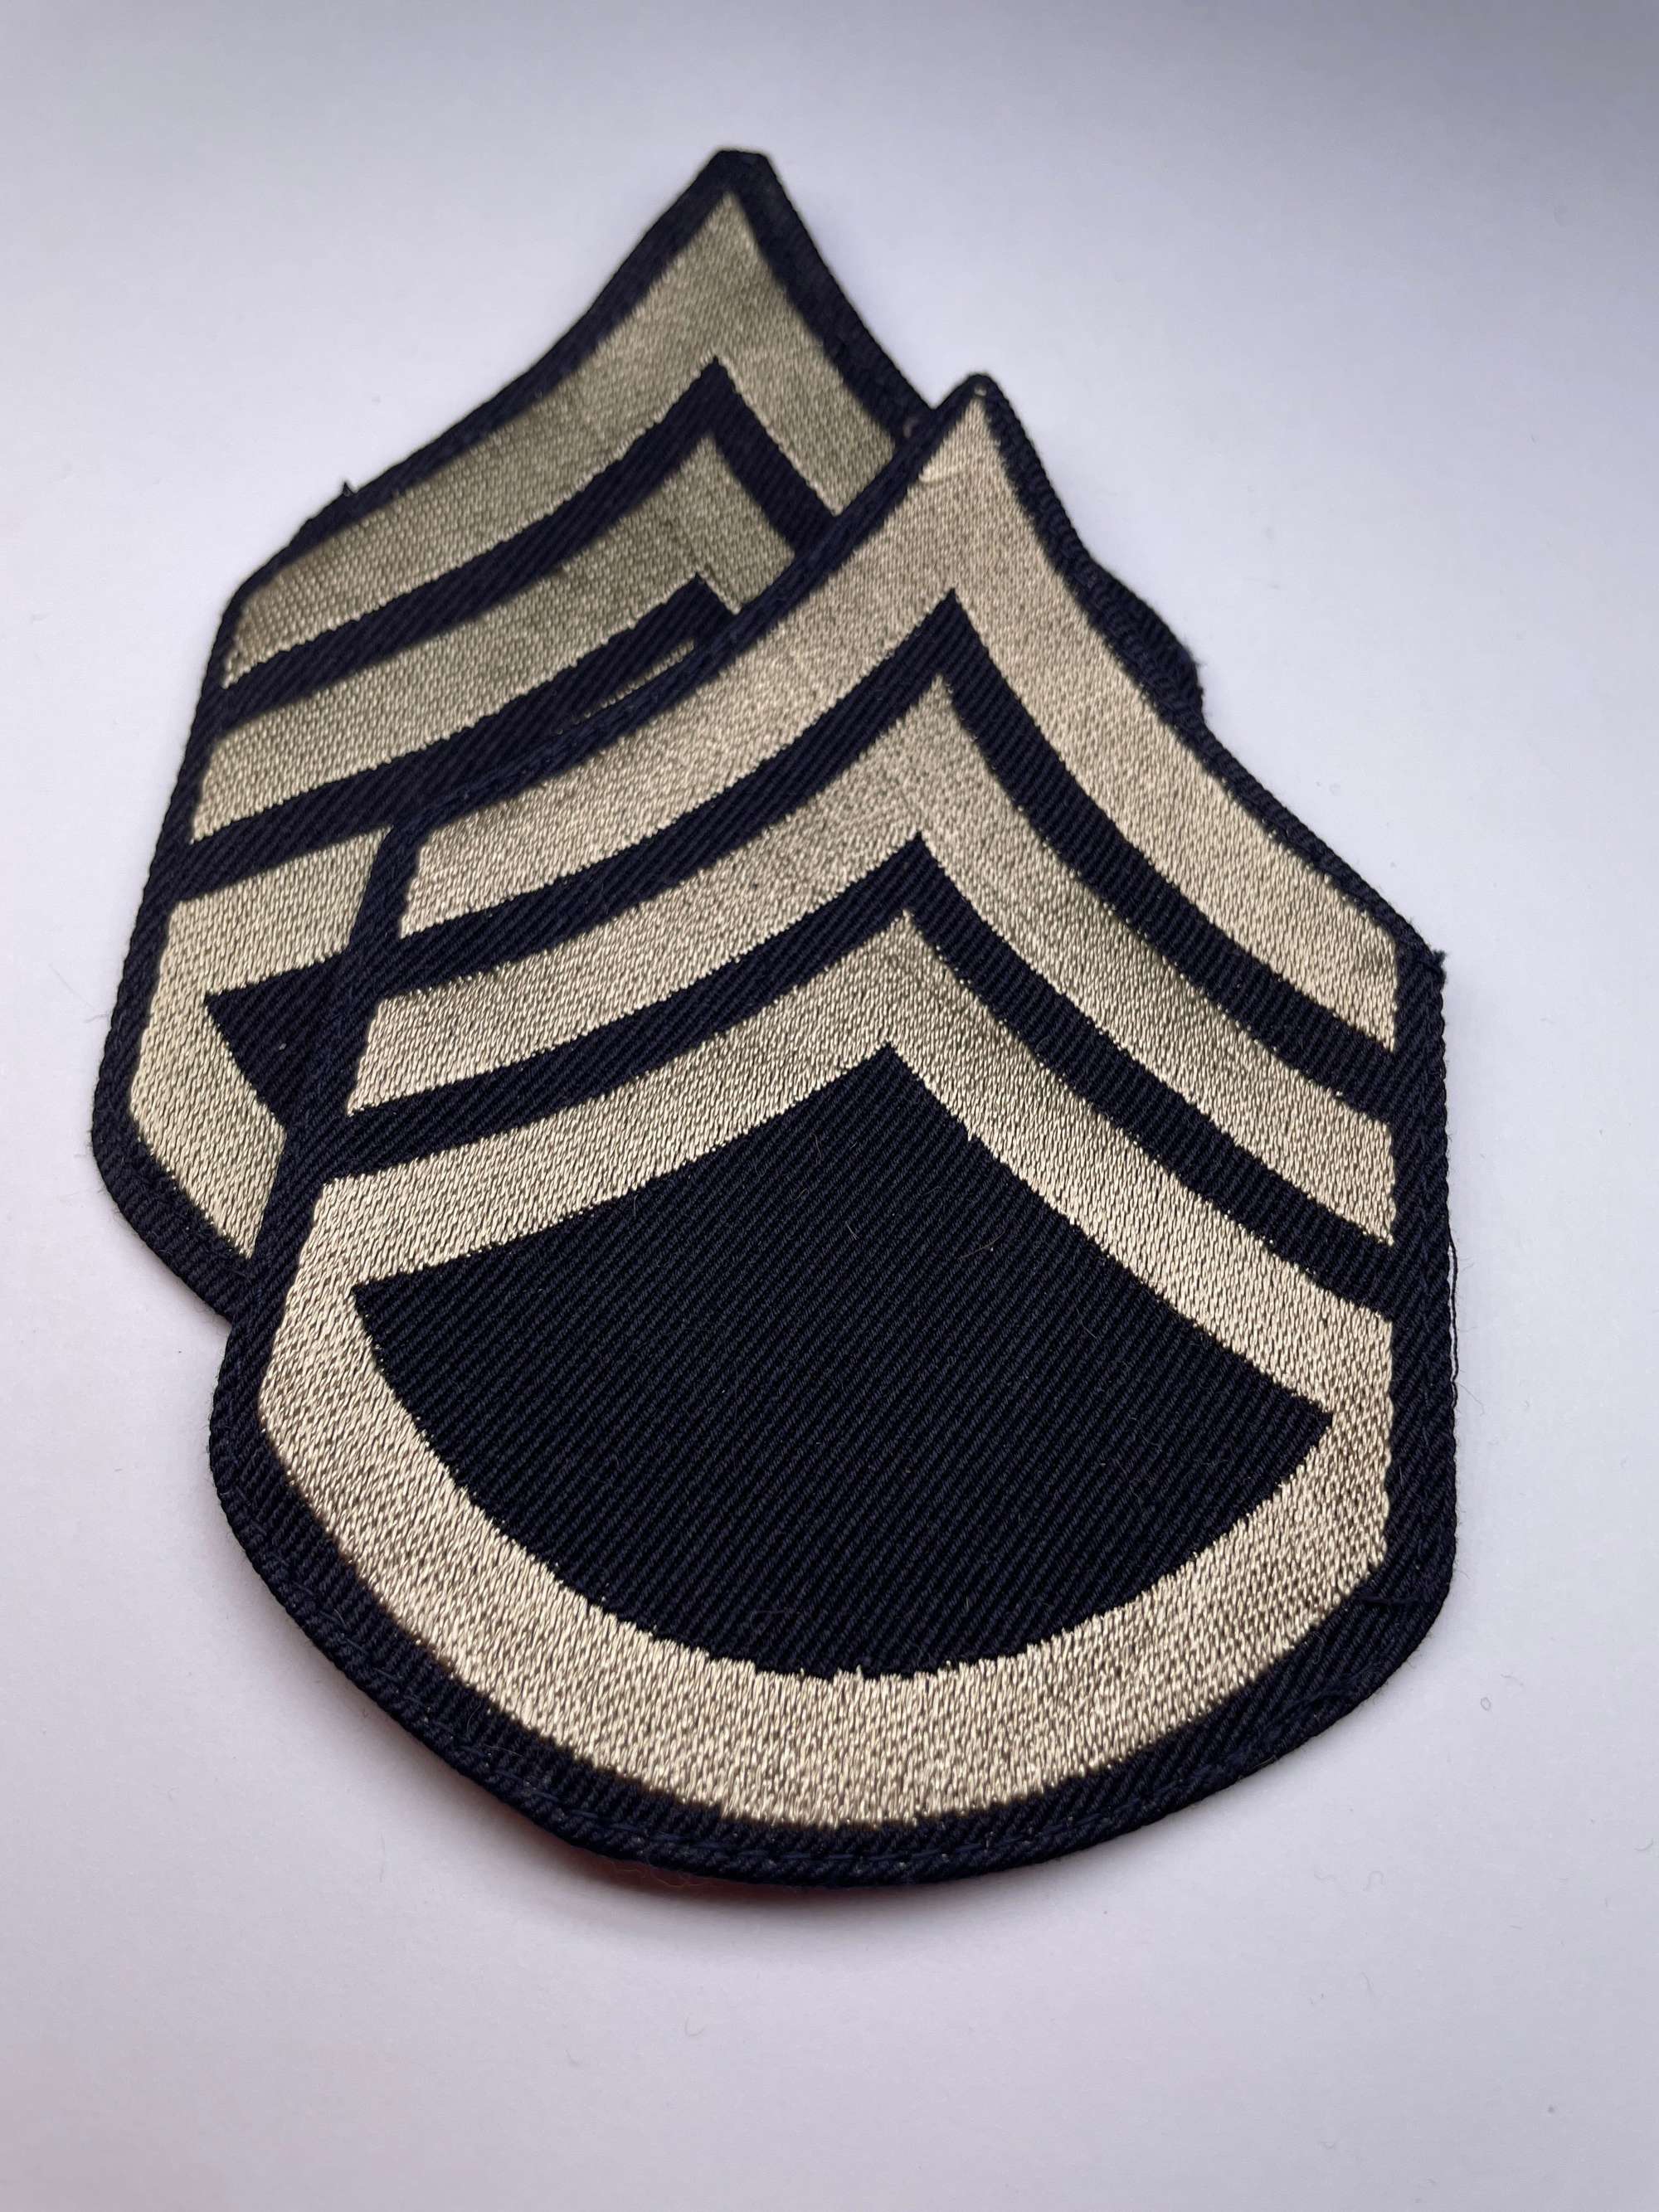 Original World War Two Era American Staff Sergeant Stripes/Chevrons